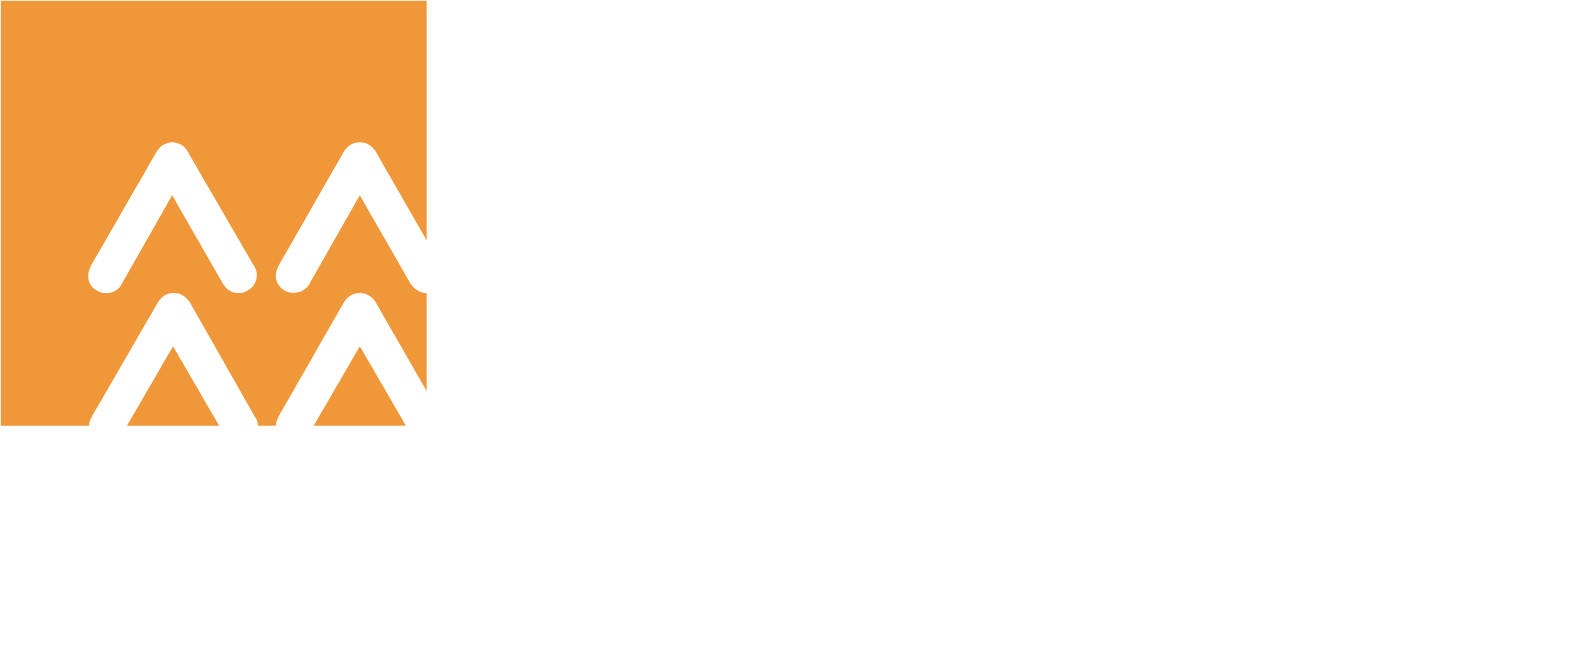 China Resources Land logo large for dark backgrounds (transparent PNG)